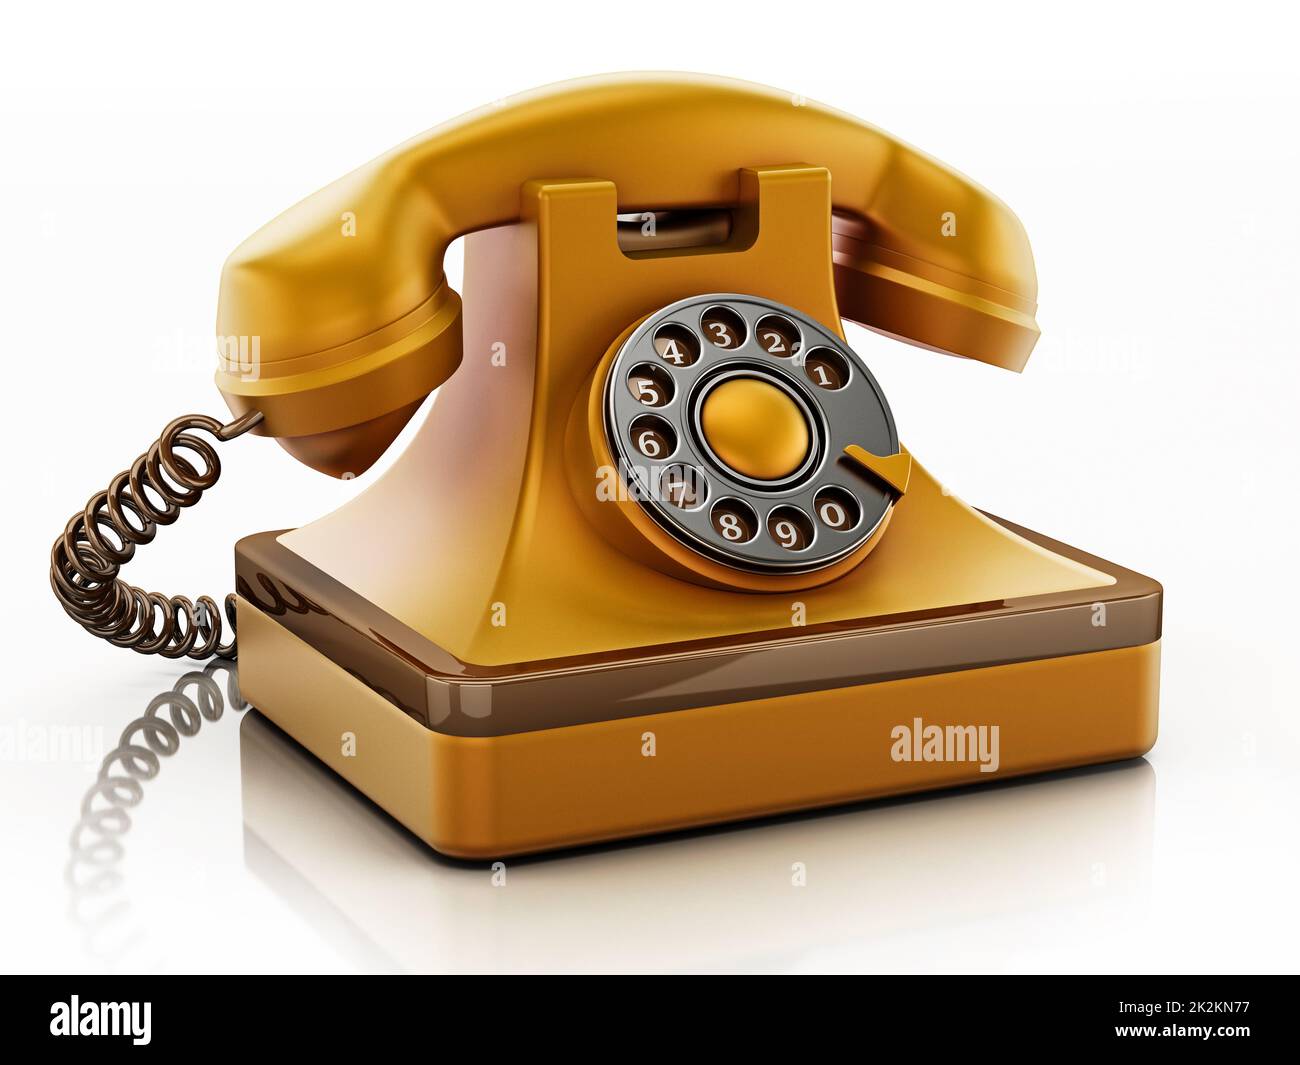 Antique rotary phone isolated on white background. 3D illustration Stock Photo